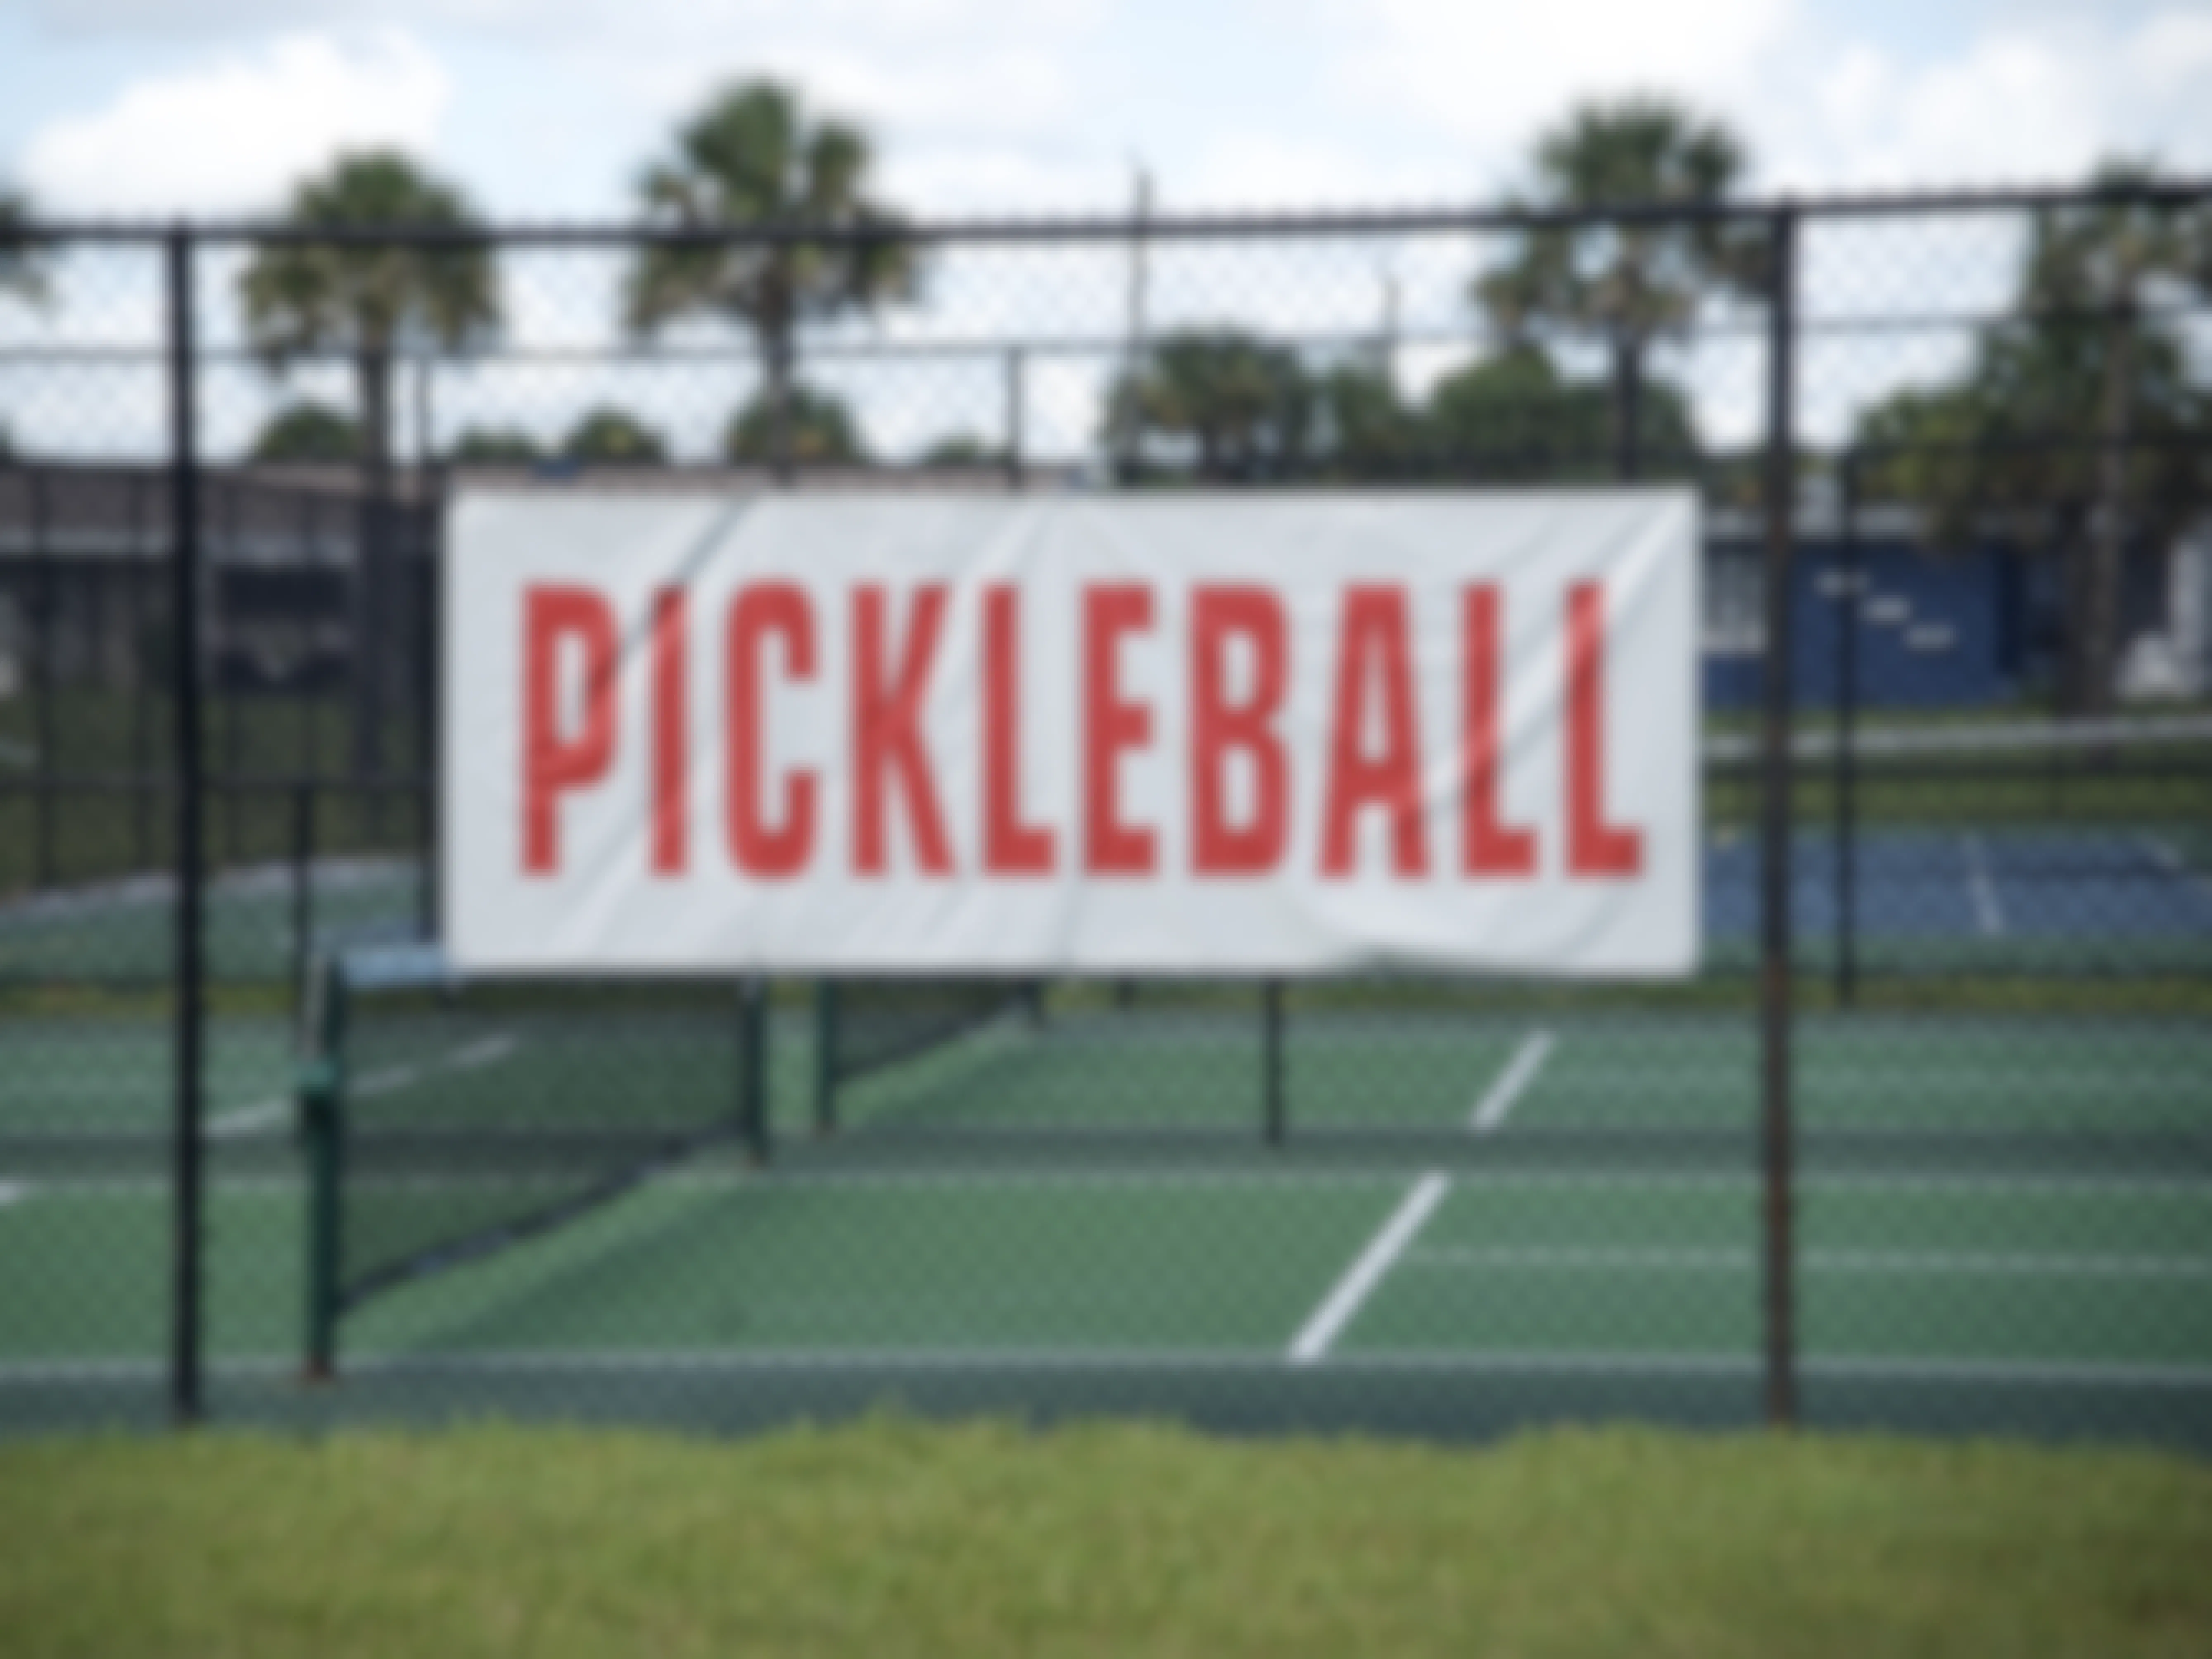 a pickleball court